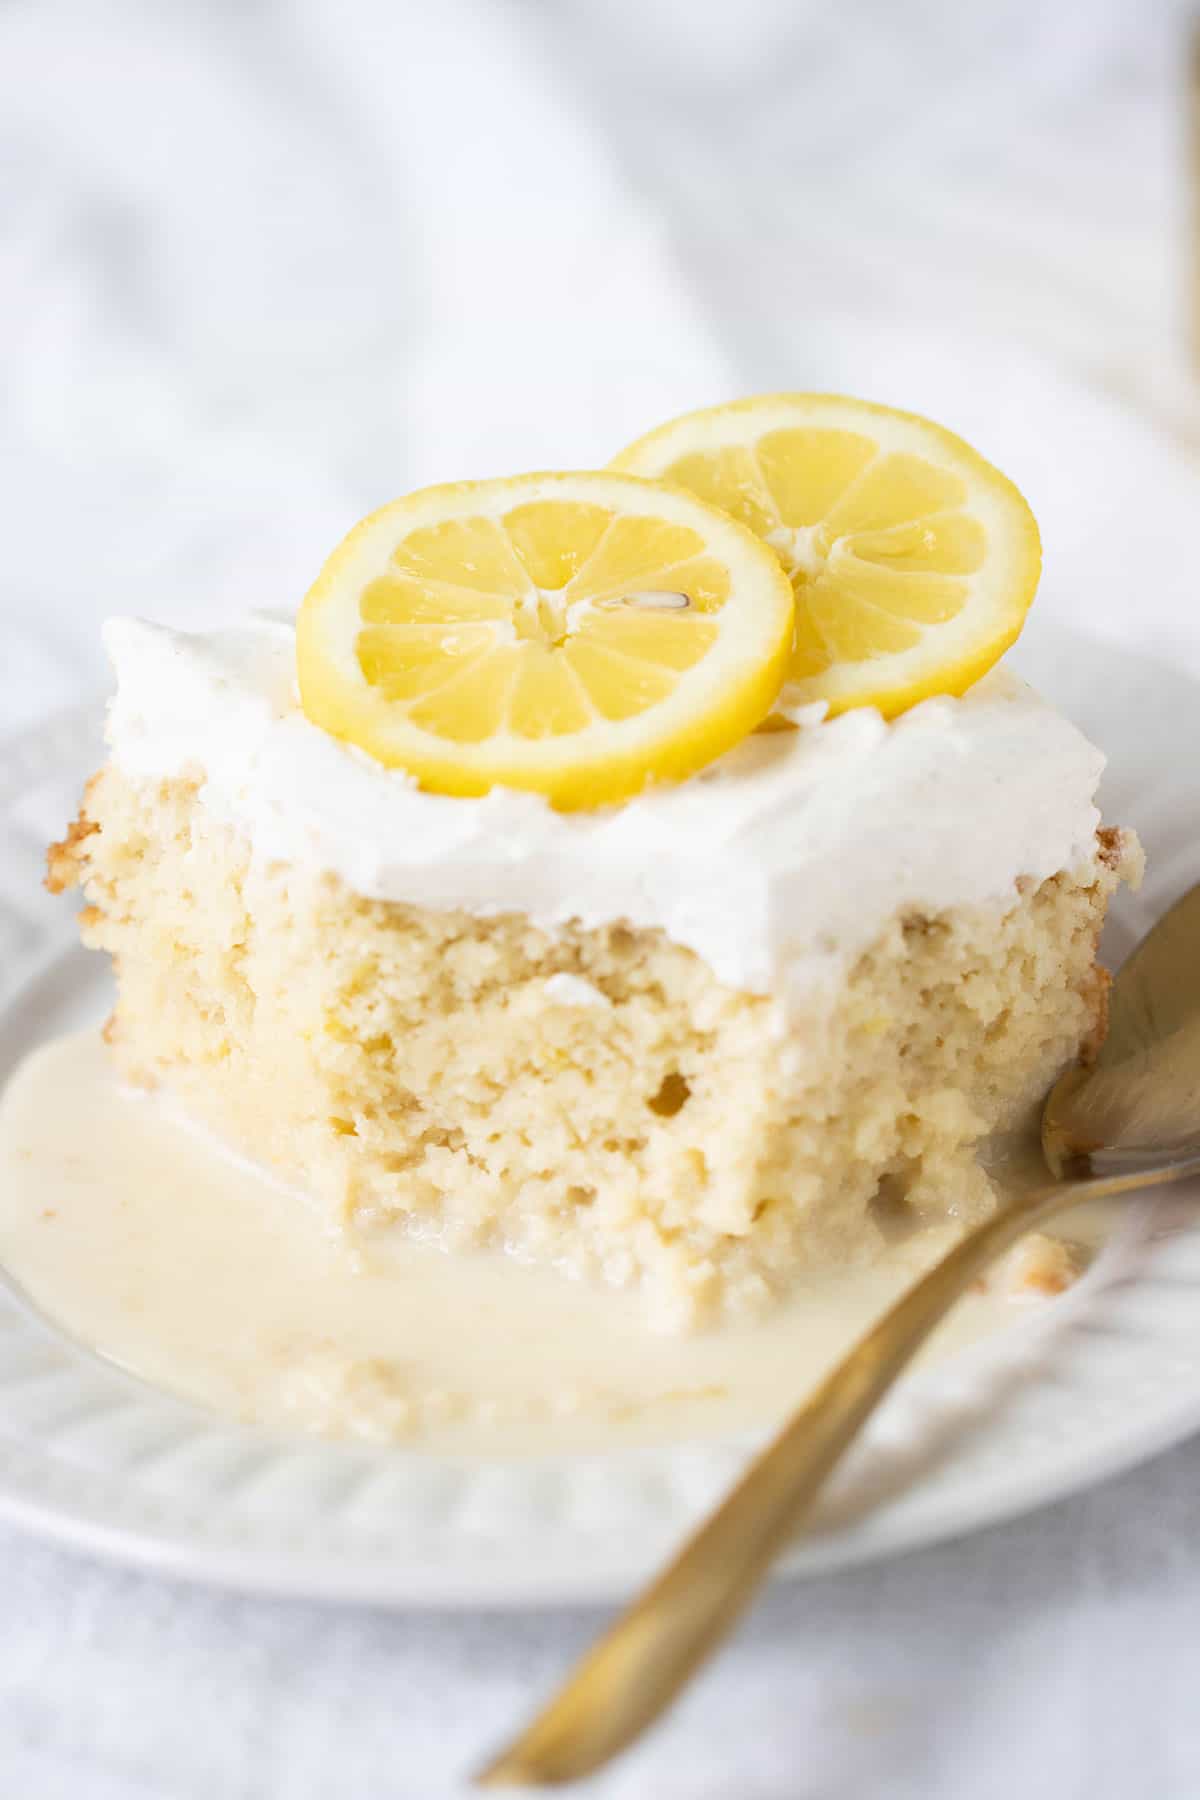 pedazo de torta tres eches de limon con una cuchara de oro sobre un plato blanco.